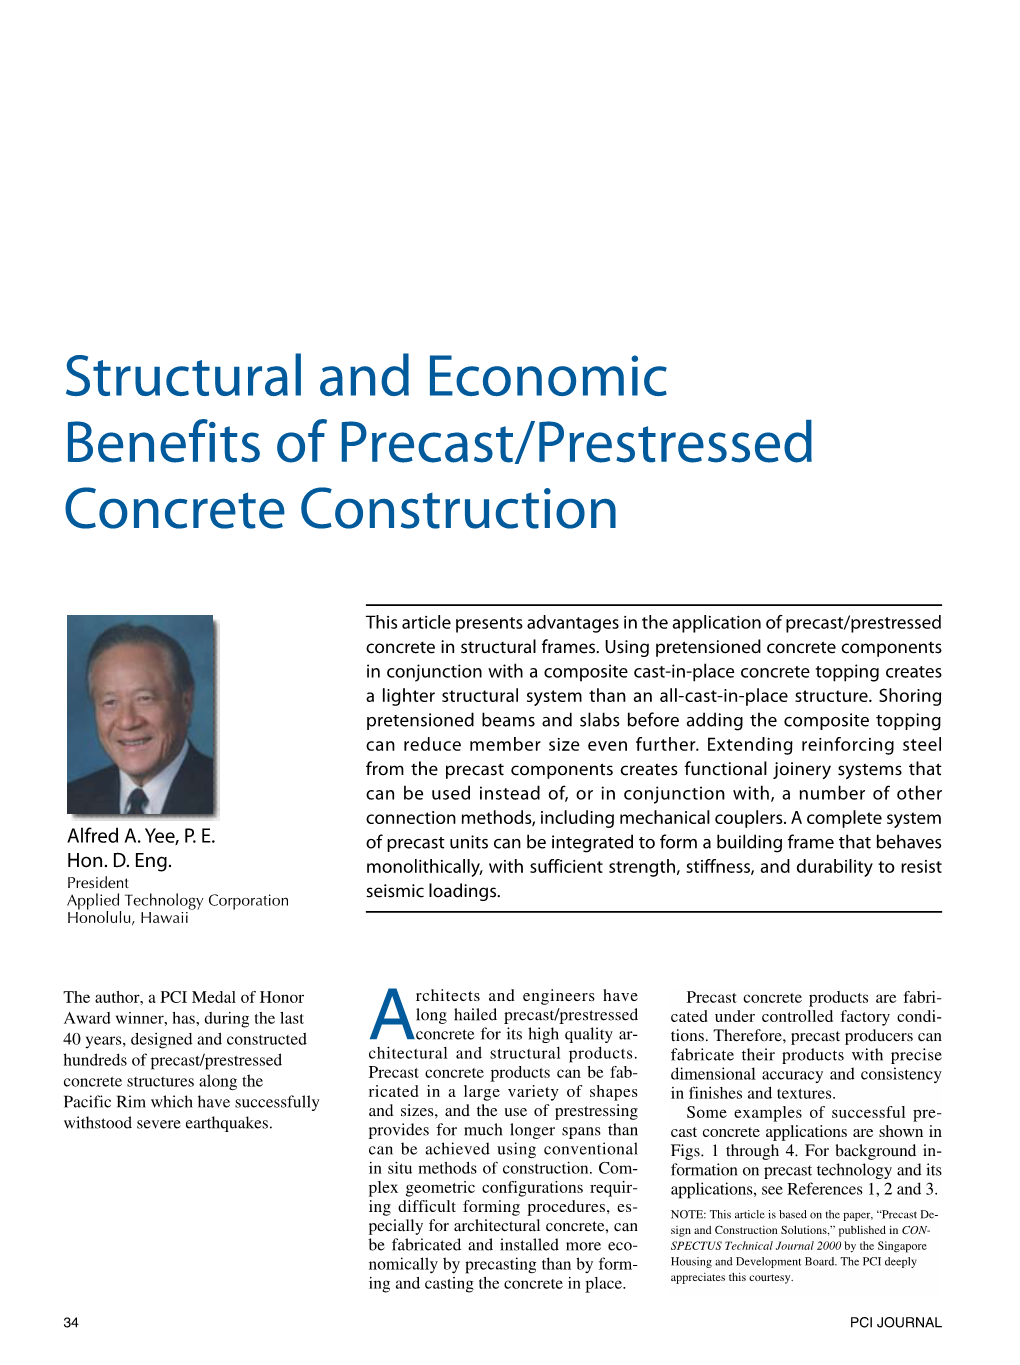 Structural and Economic Benefits of Precast/Prestressed Concrete Construction